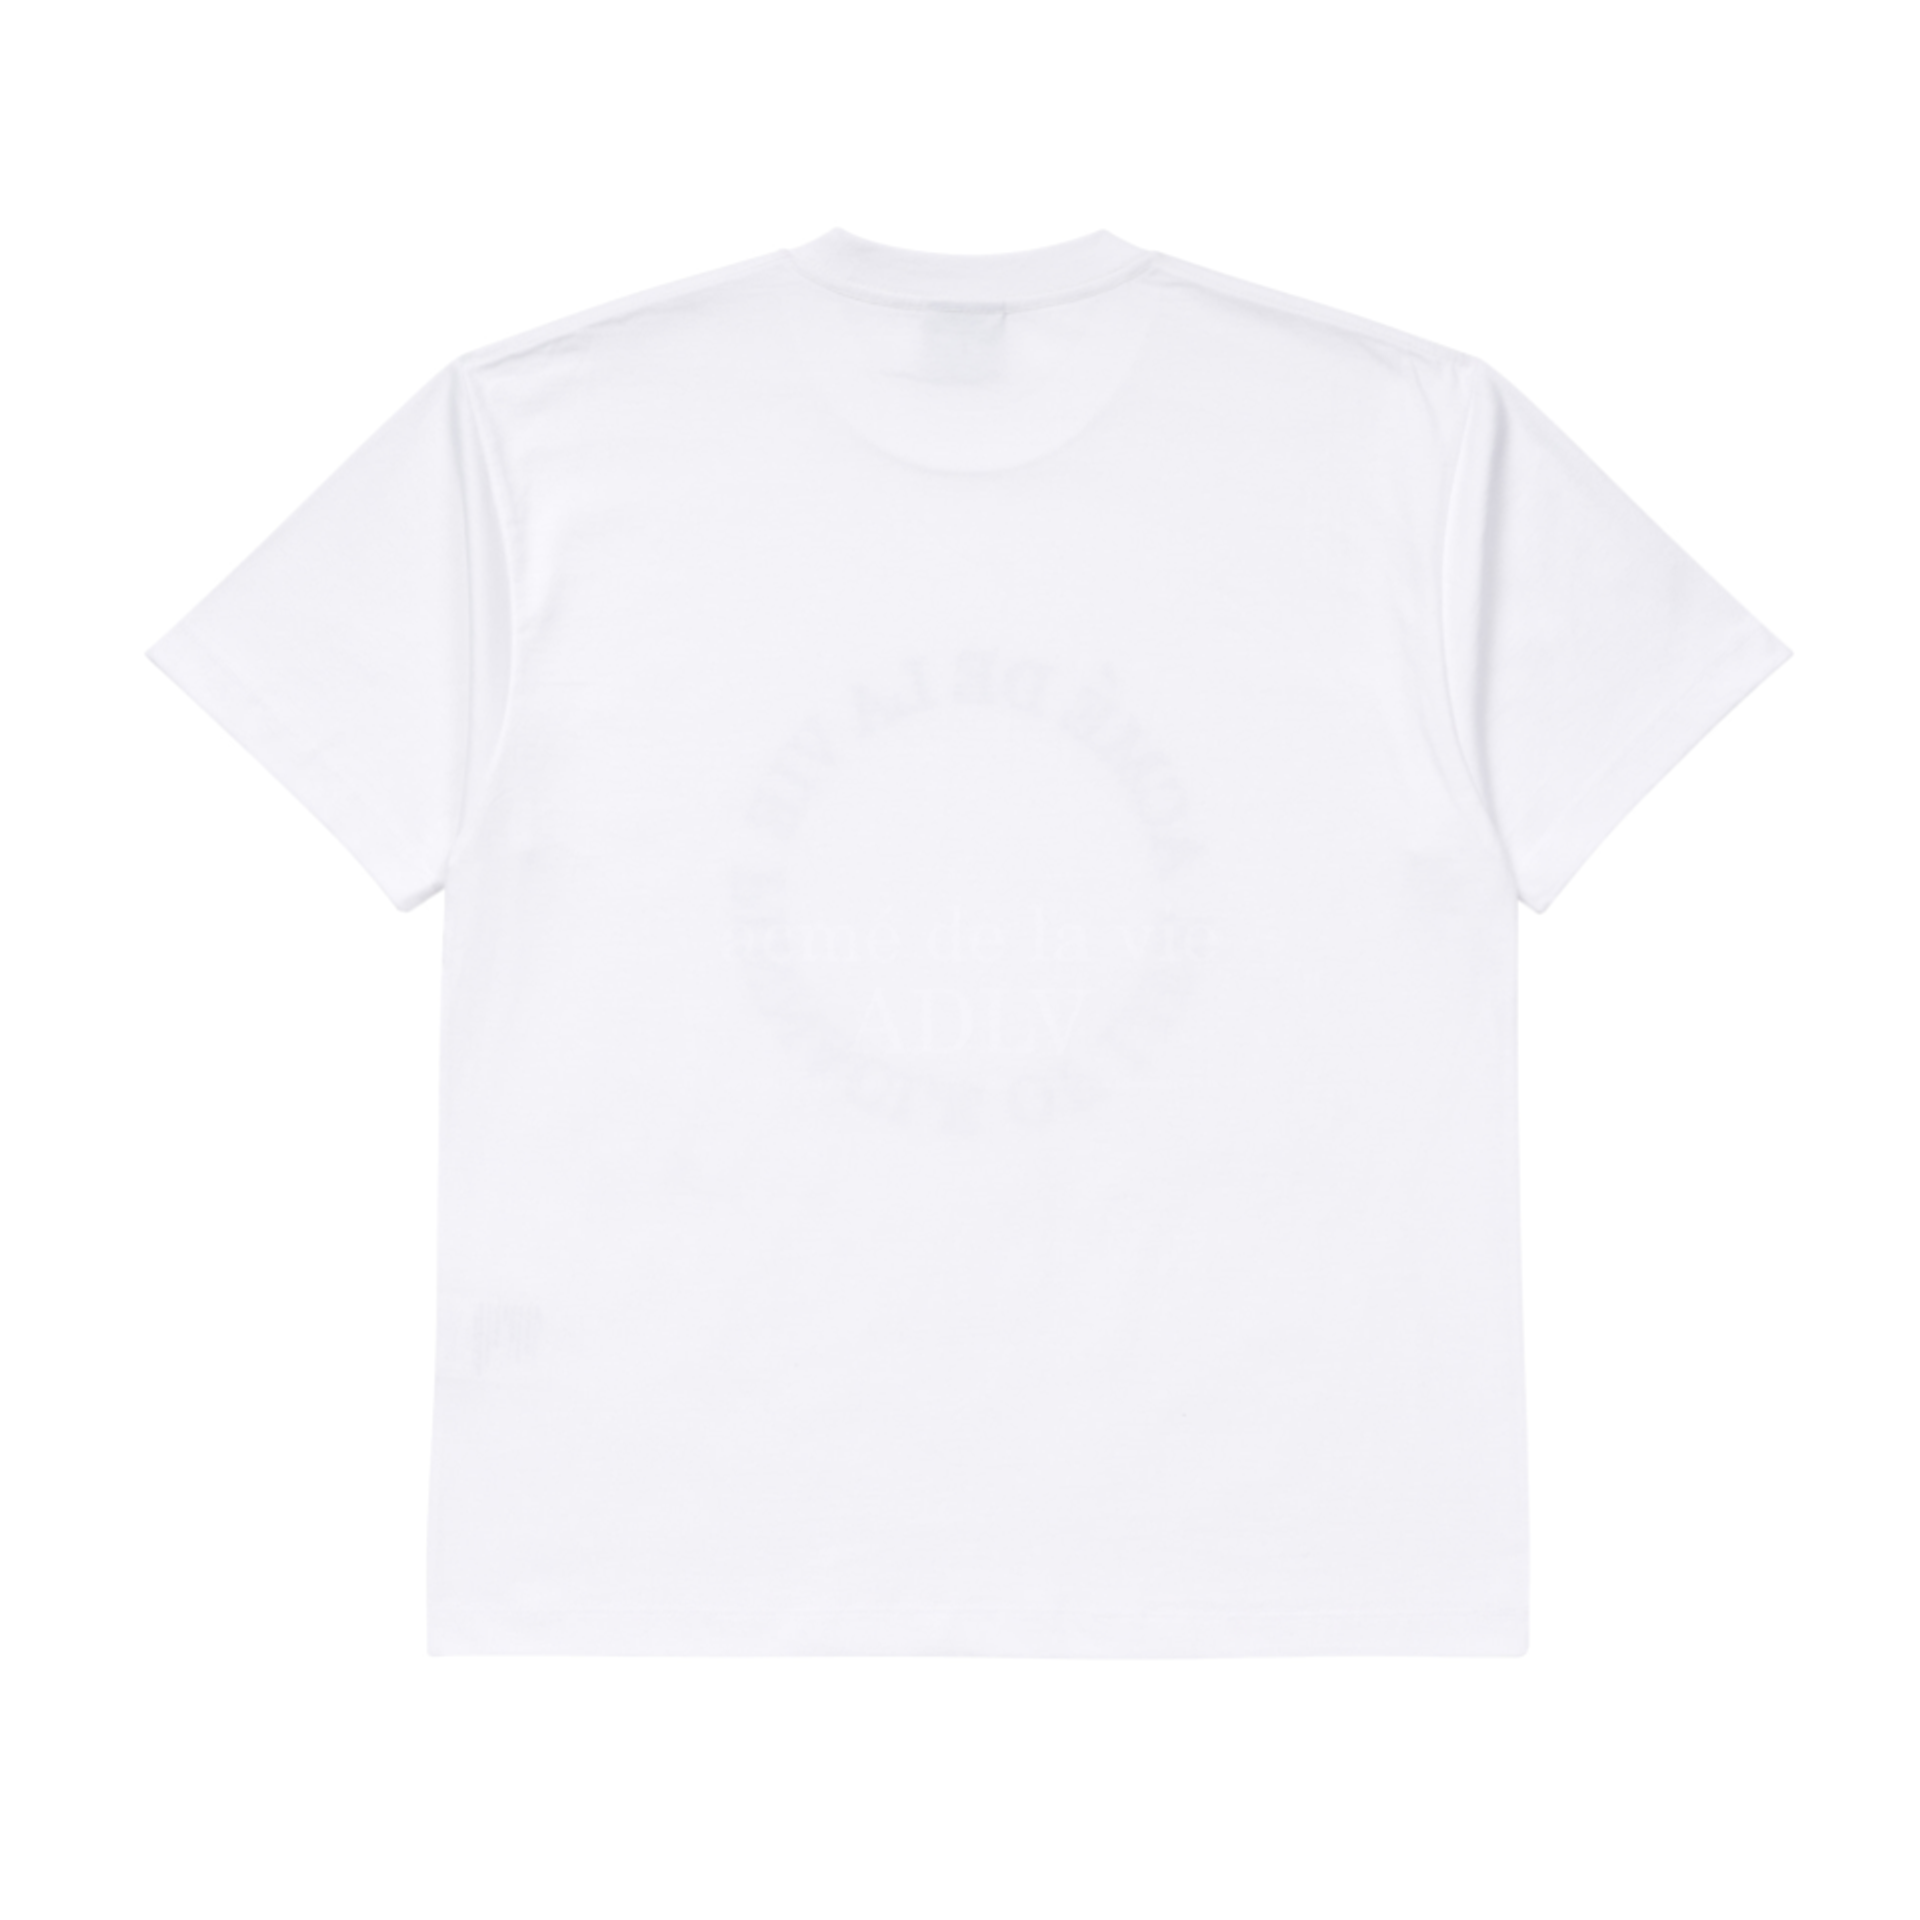 Acme De La Vie x LISA Circle Logo Artwork Basic Short Sleeve T-Shirt White